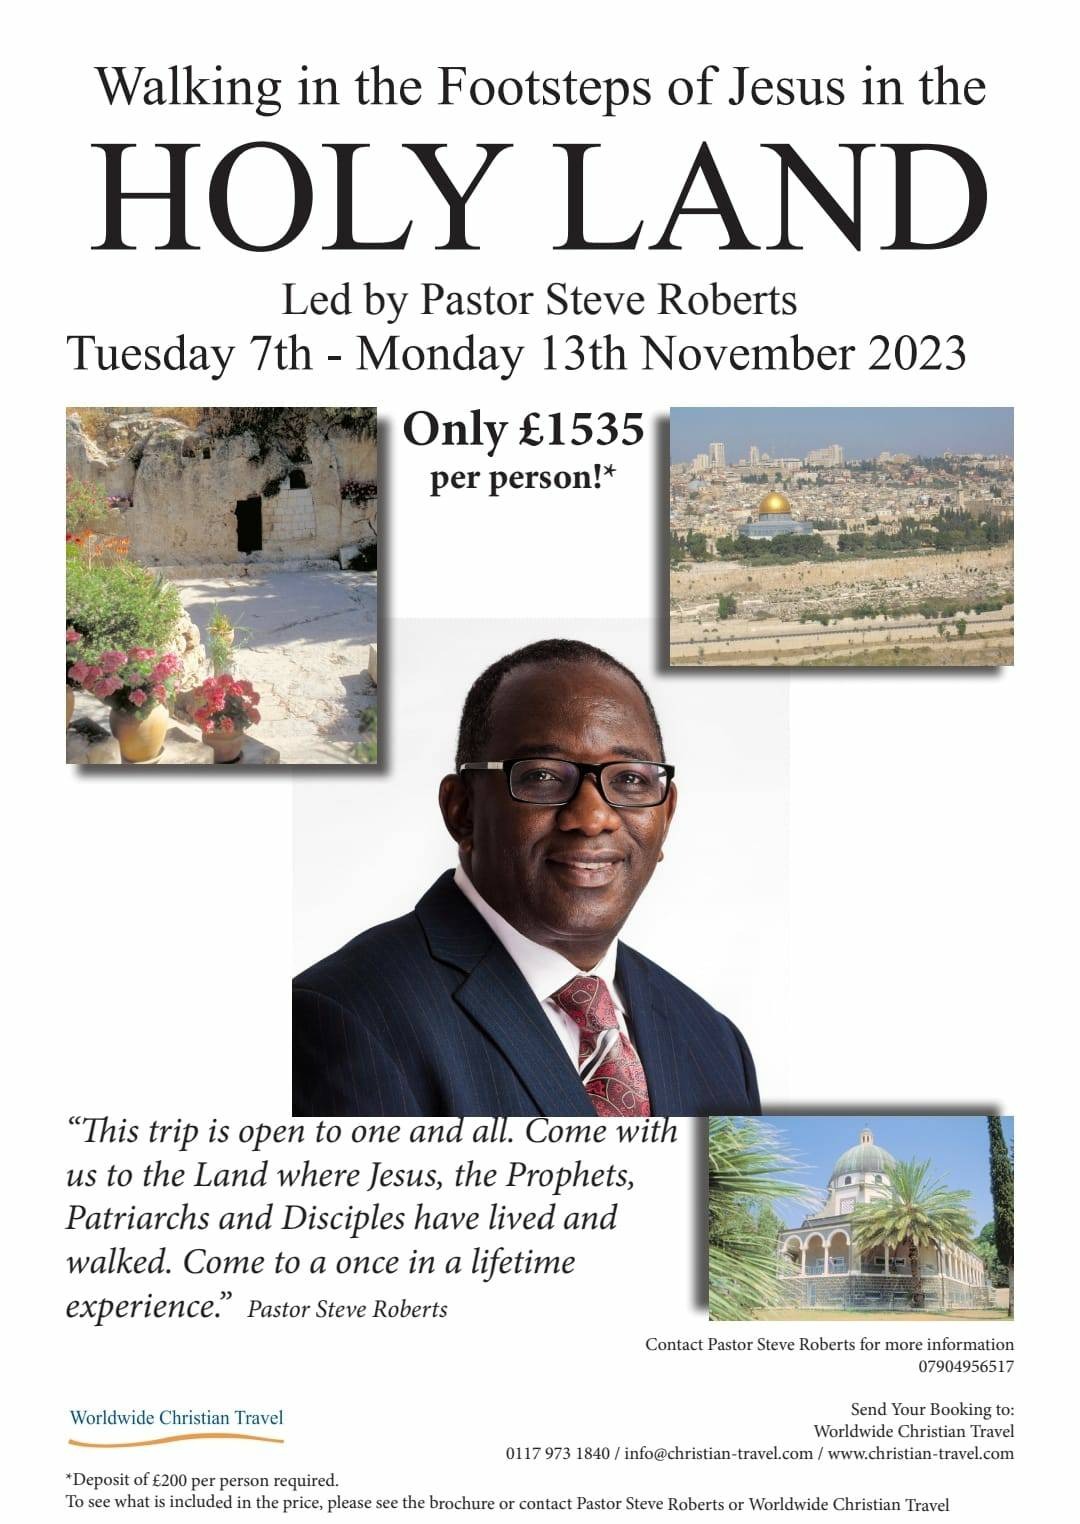 Holy Land visit: 7th - 13th November 2023